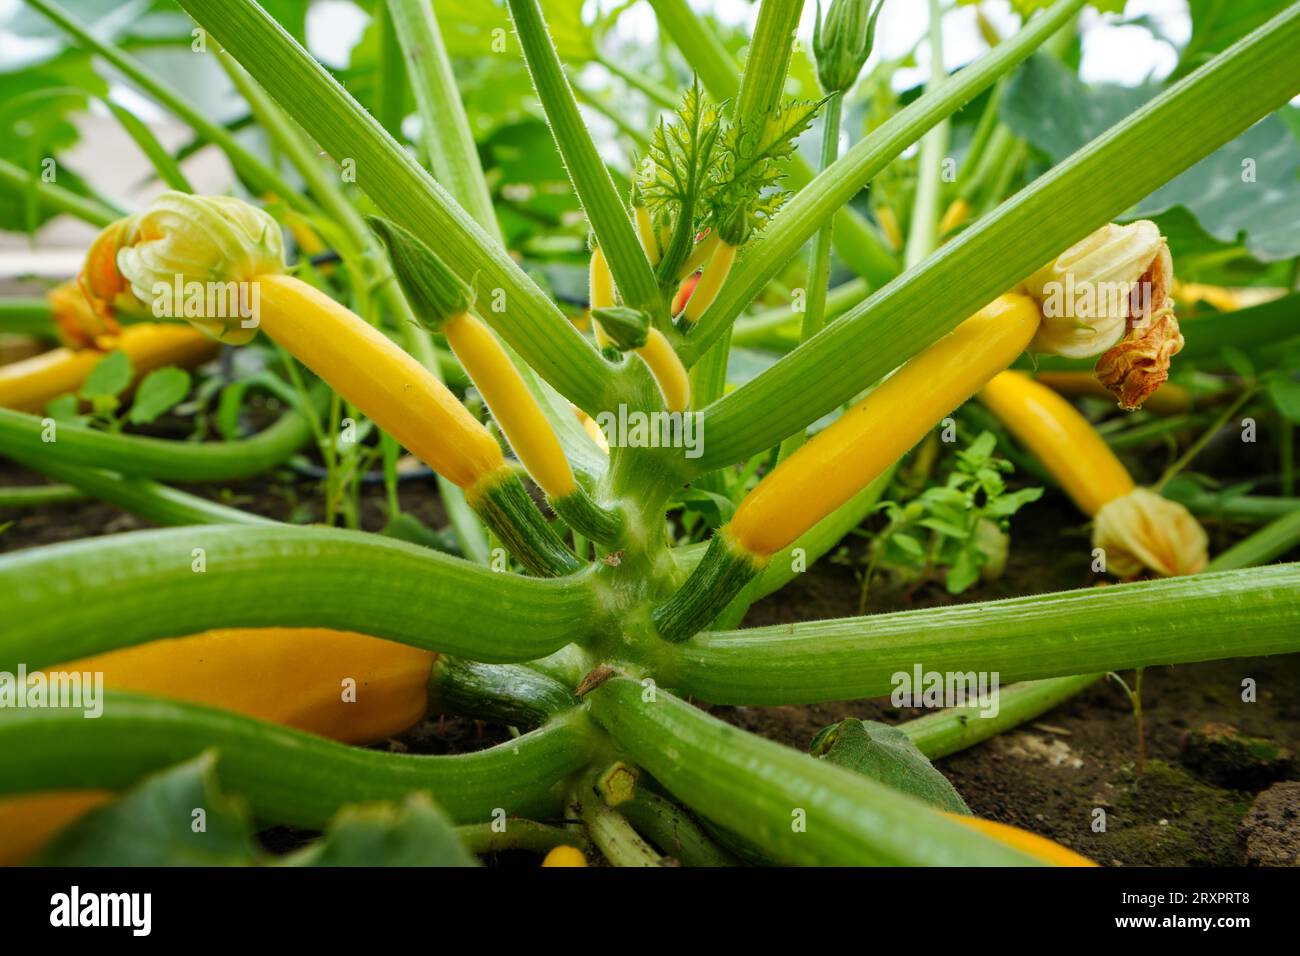 Banana shaped zucchini in the greenhouse, North China Stock Photo